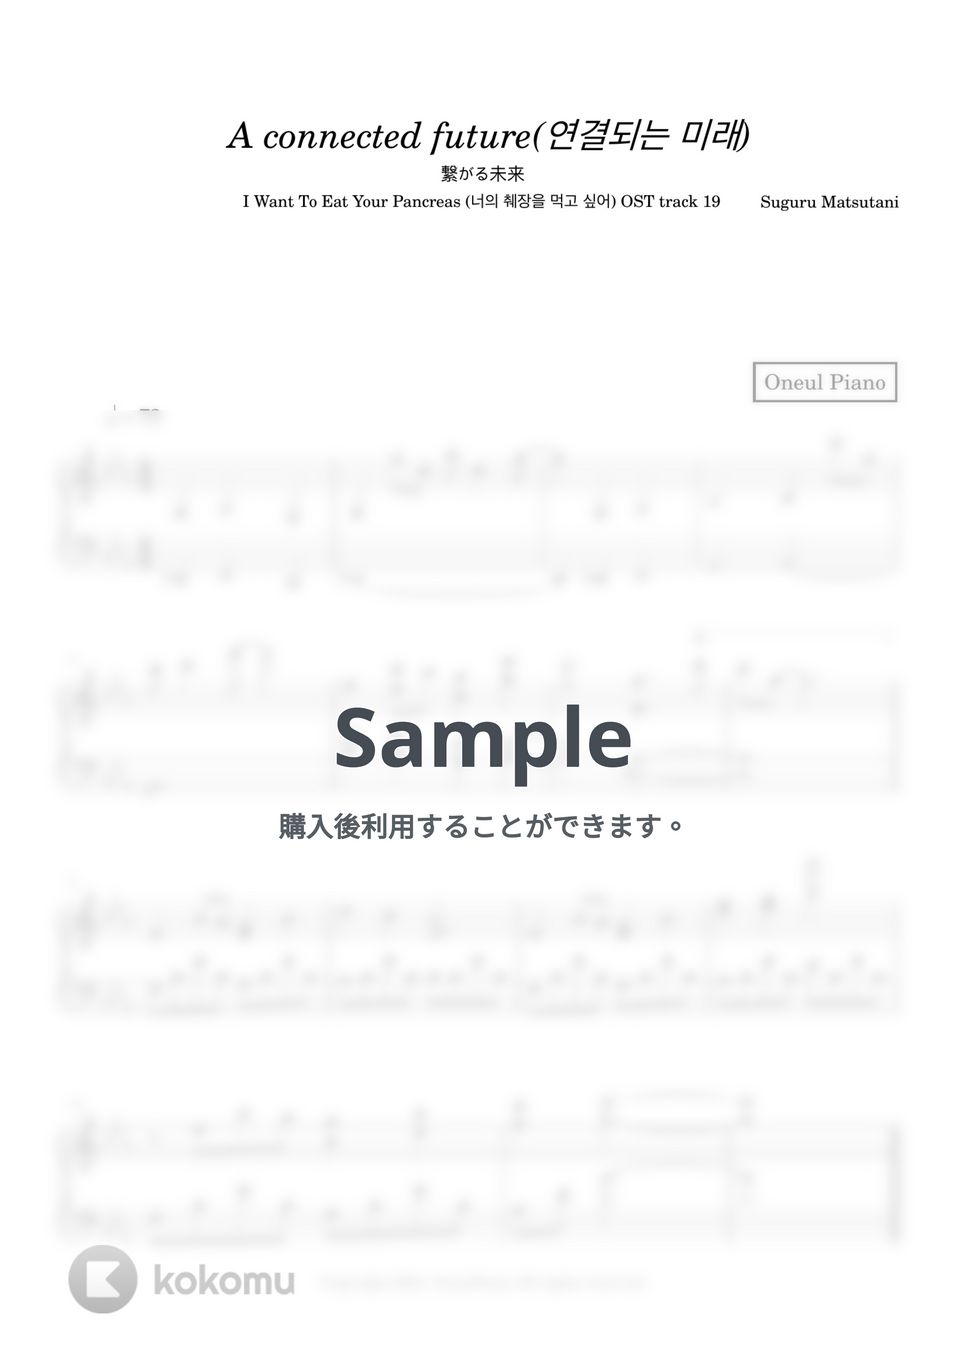 Suguru Matsutani - 繋がる未来 (A connected future) (君の膵臓をたべたい (I Want To Eat Your Pancreas) OST track 19) by 今日ピアノ(Oneul Piano)